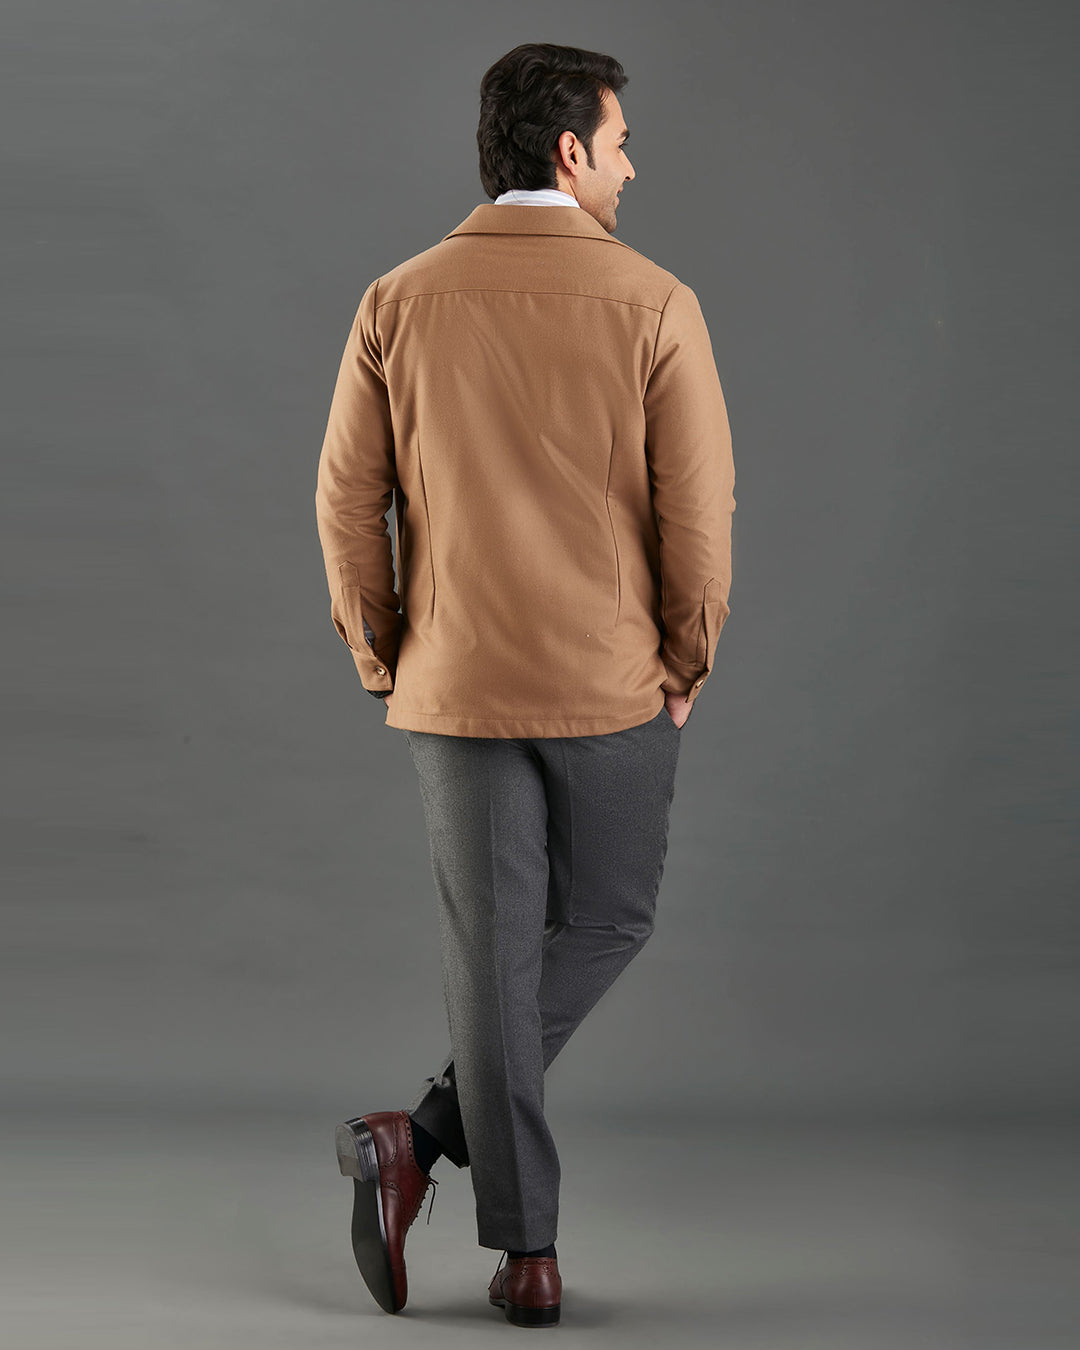 Back of model wearing the woolen flannel shirt jacket for men by Luxire in tan hands in pockets